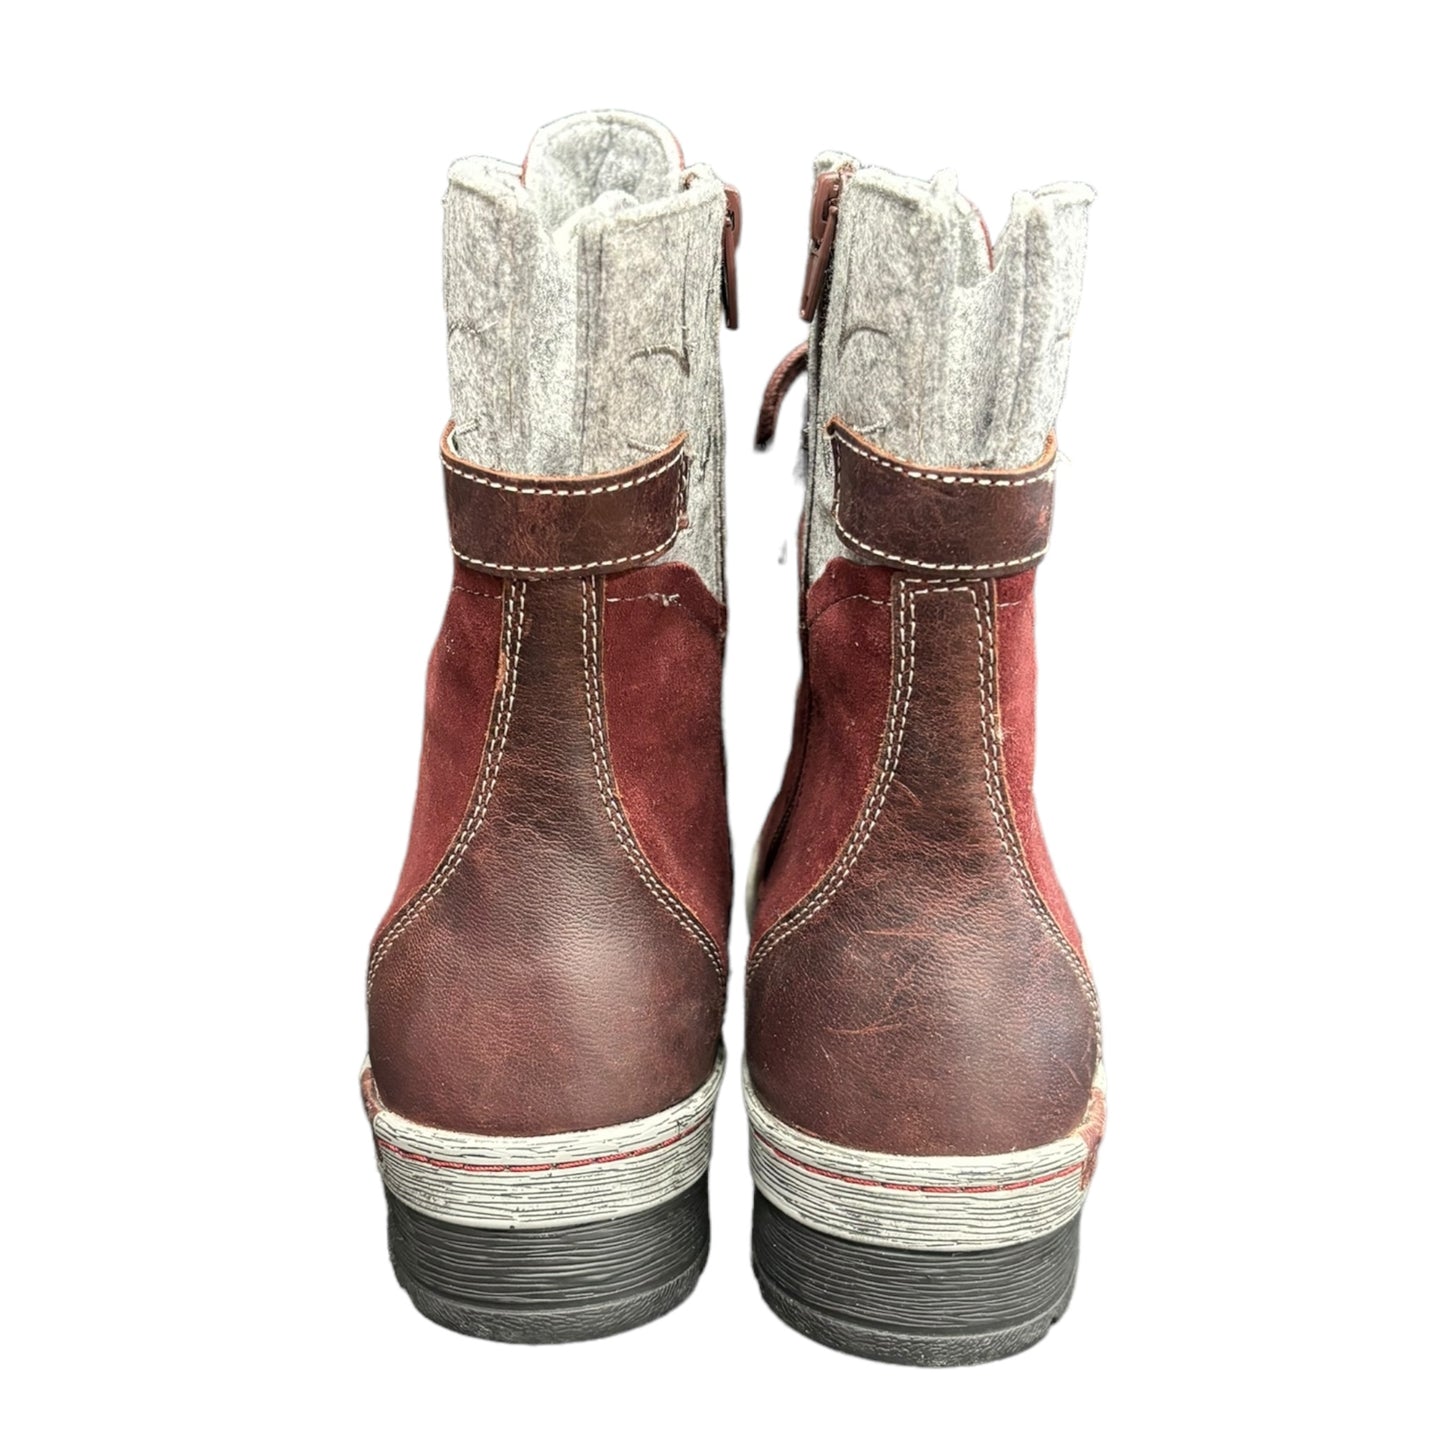 Boots Ankle Flats By Jambu  Size: 7.5